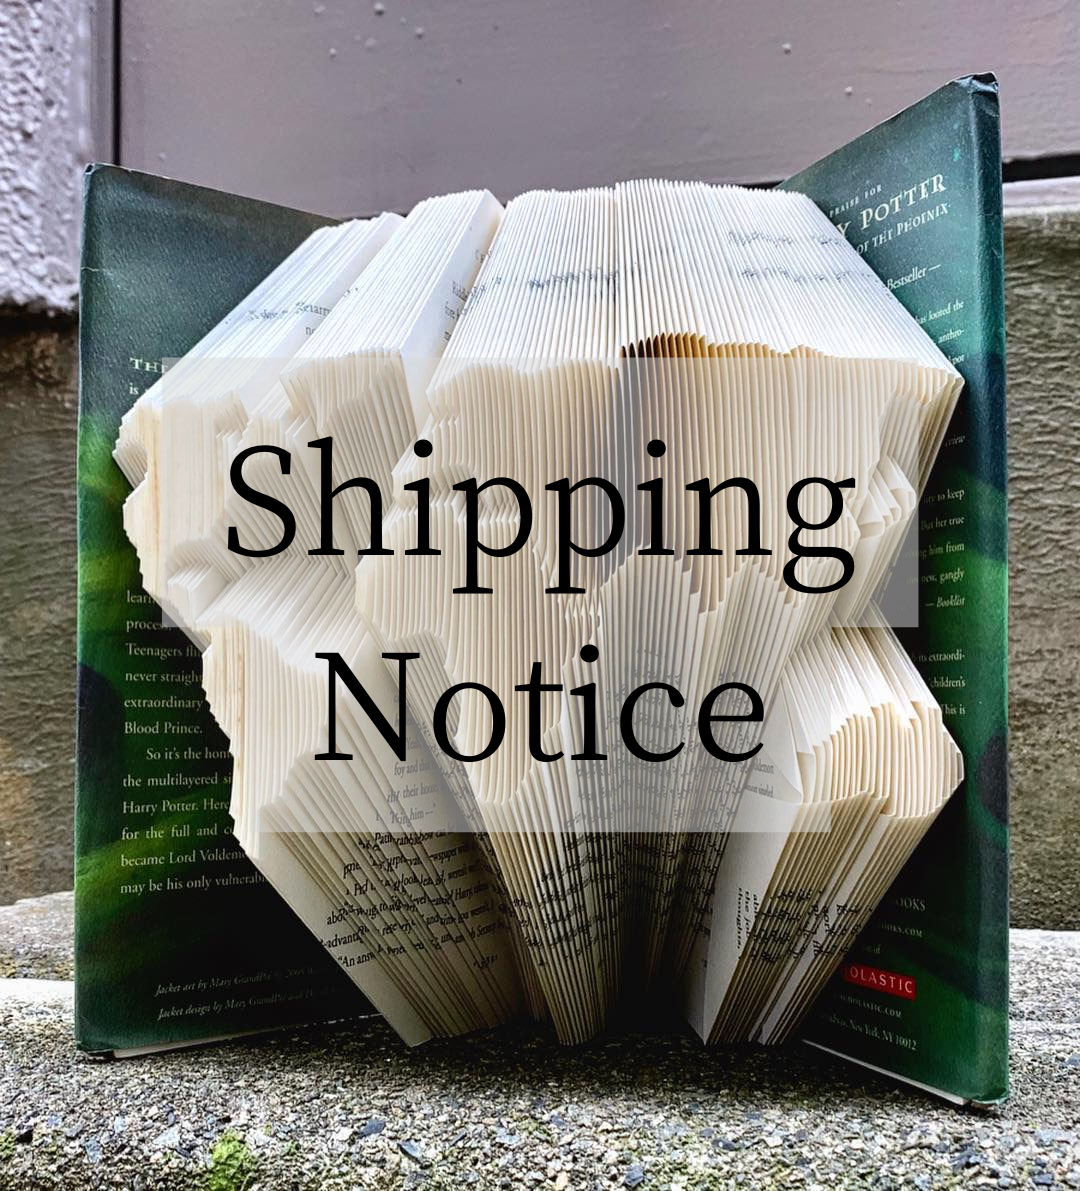 Delay in shipping notice